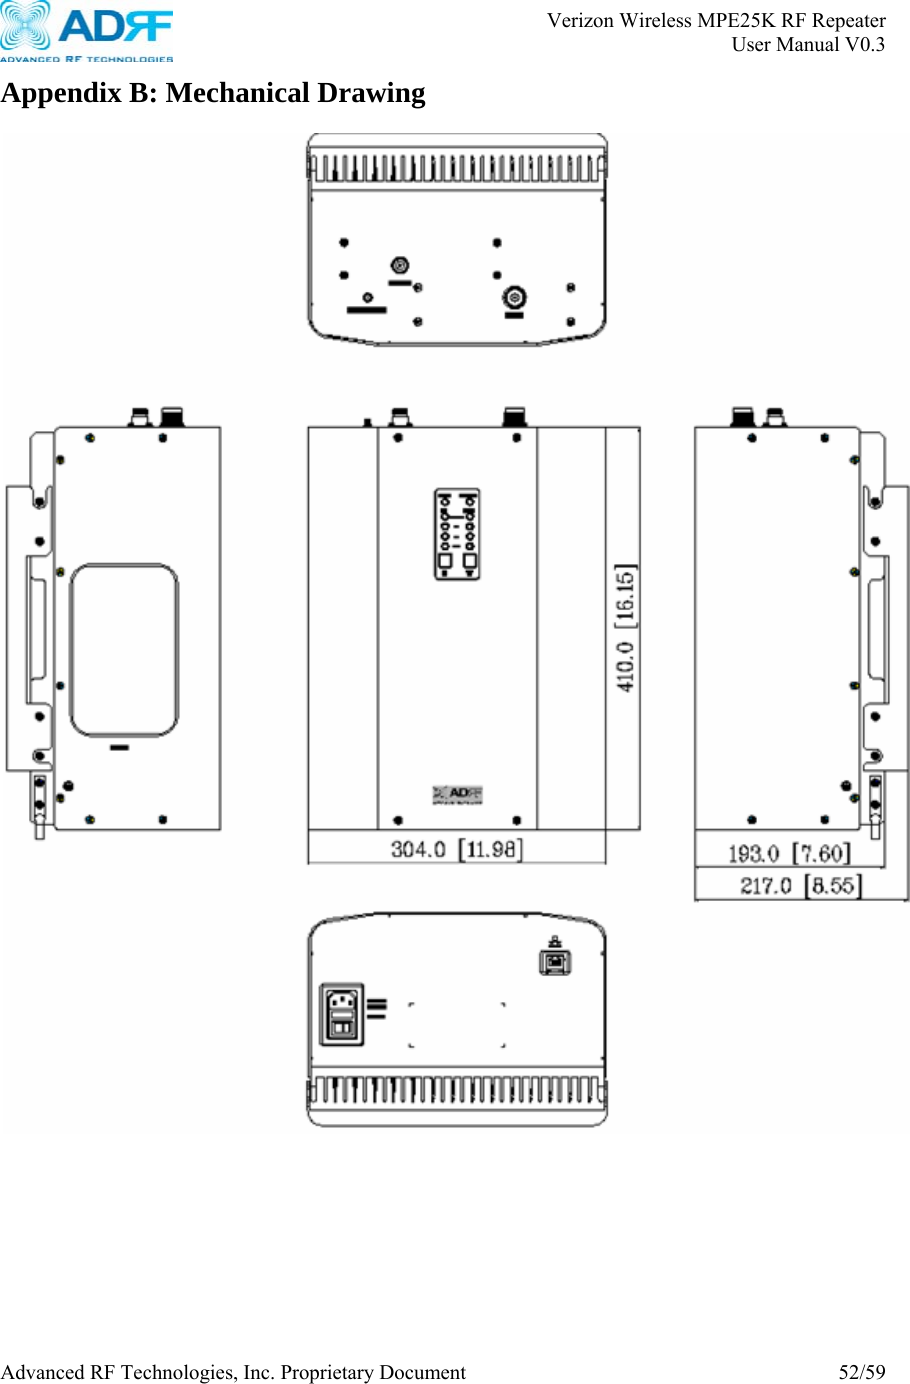       Verizon Wireless MPE25K RF Repeater   User Manual V0.3 Advanced RF Technologies, Inc. Proprietary Document  52/59  Appendix B: Mechanical Drawing     